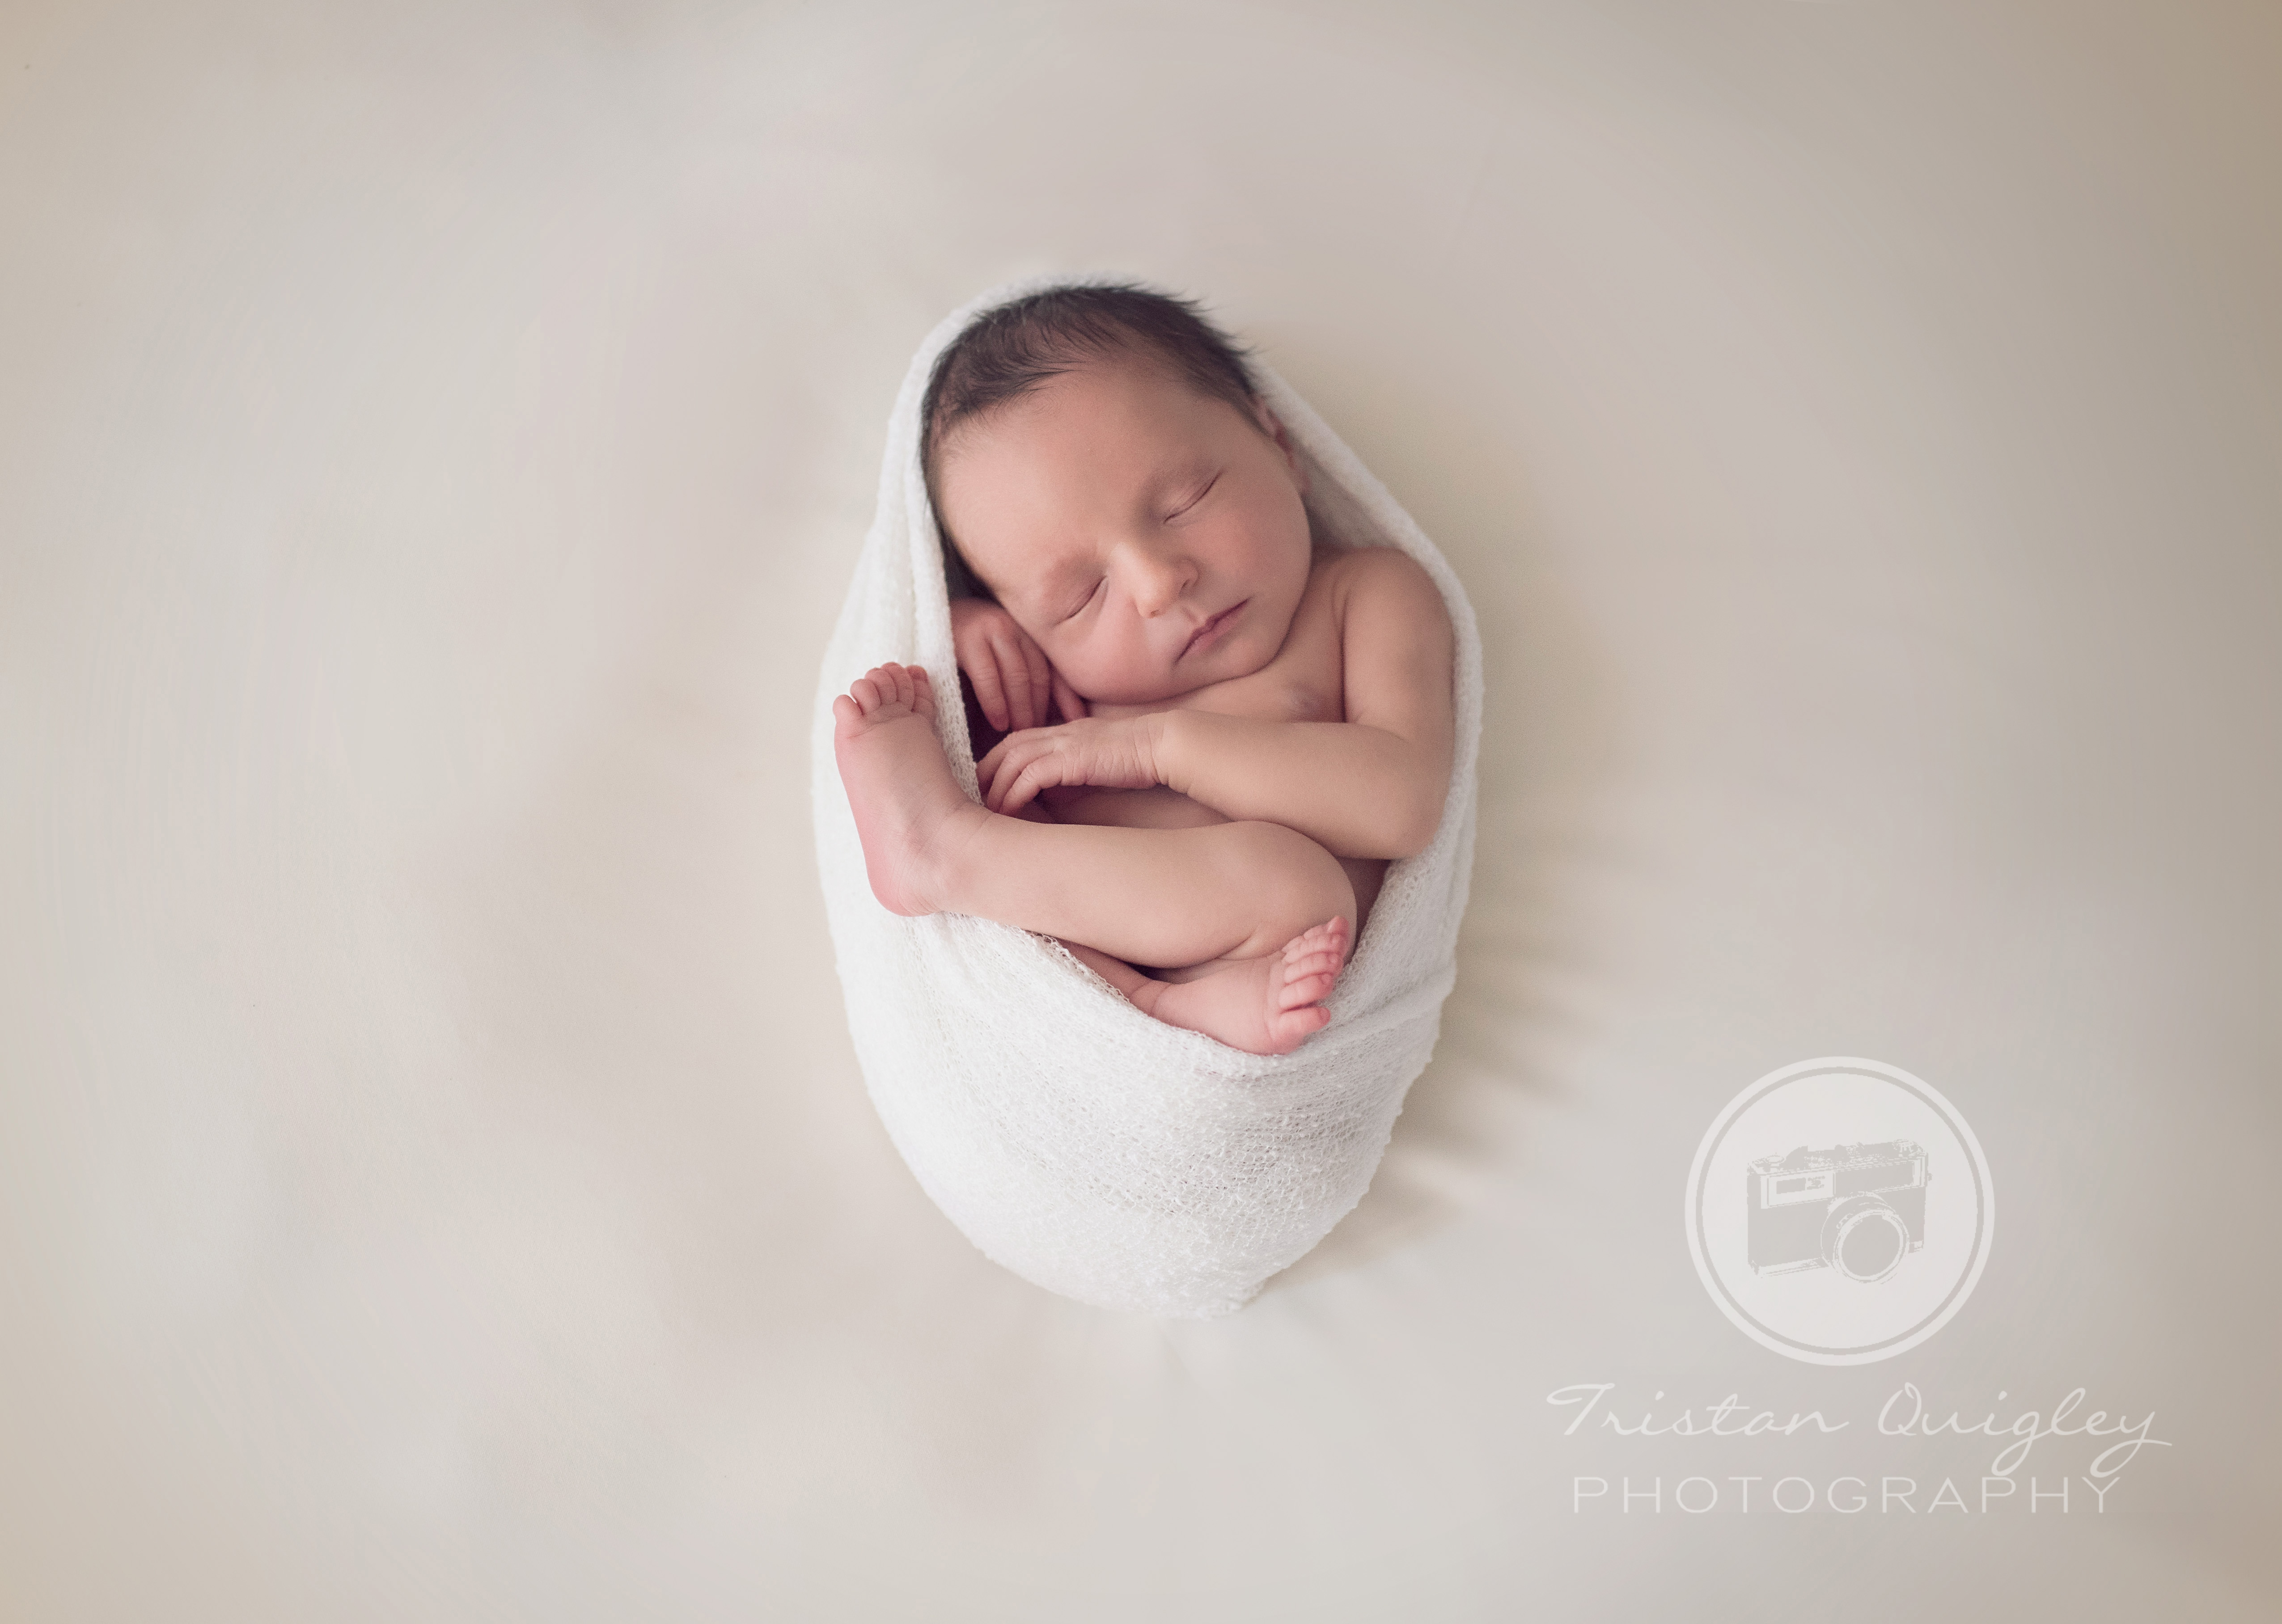 La Jolla Newborn Photography - La Jolla, CA- Tristan Quigley Photography